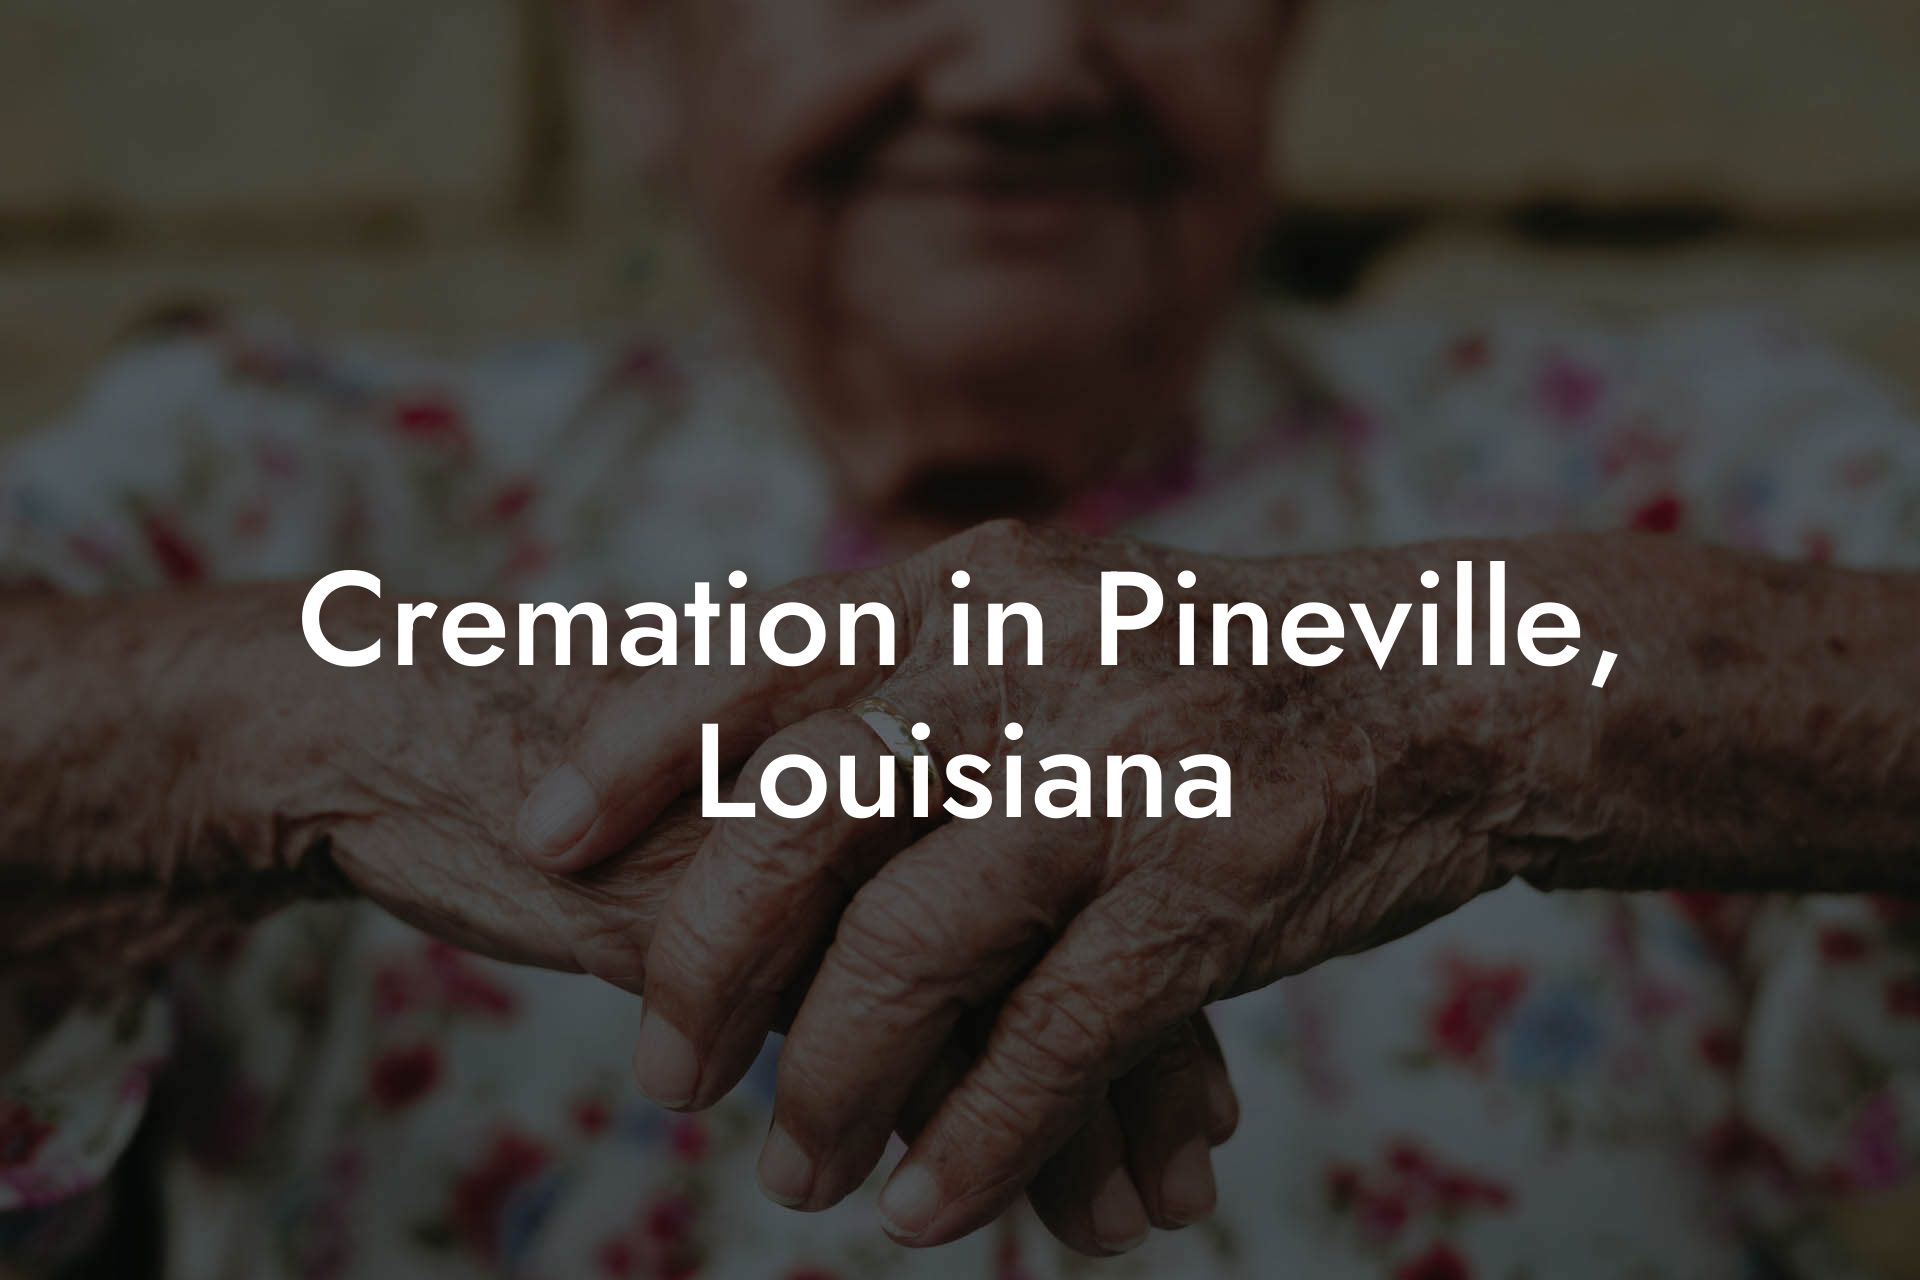 Cremation in Pineville, Louisiana